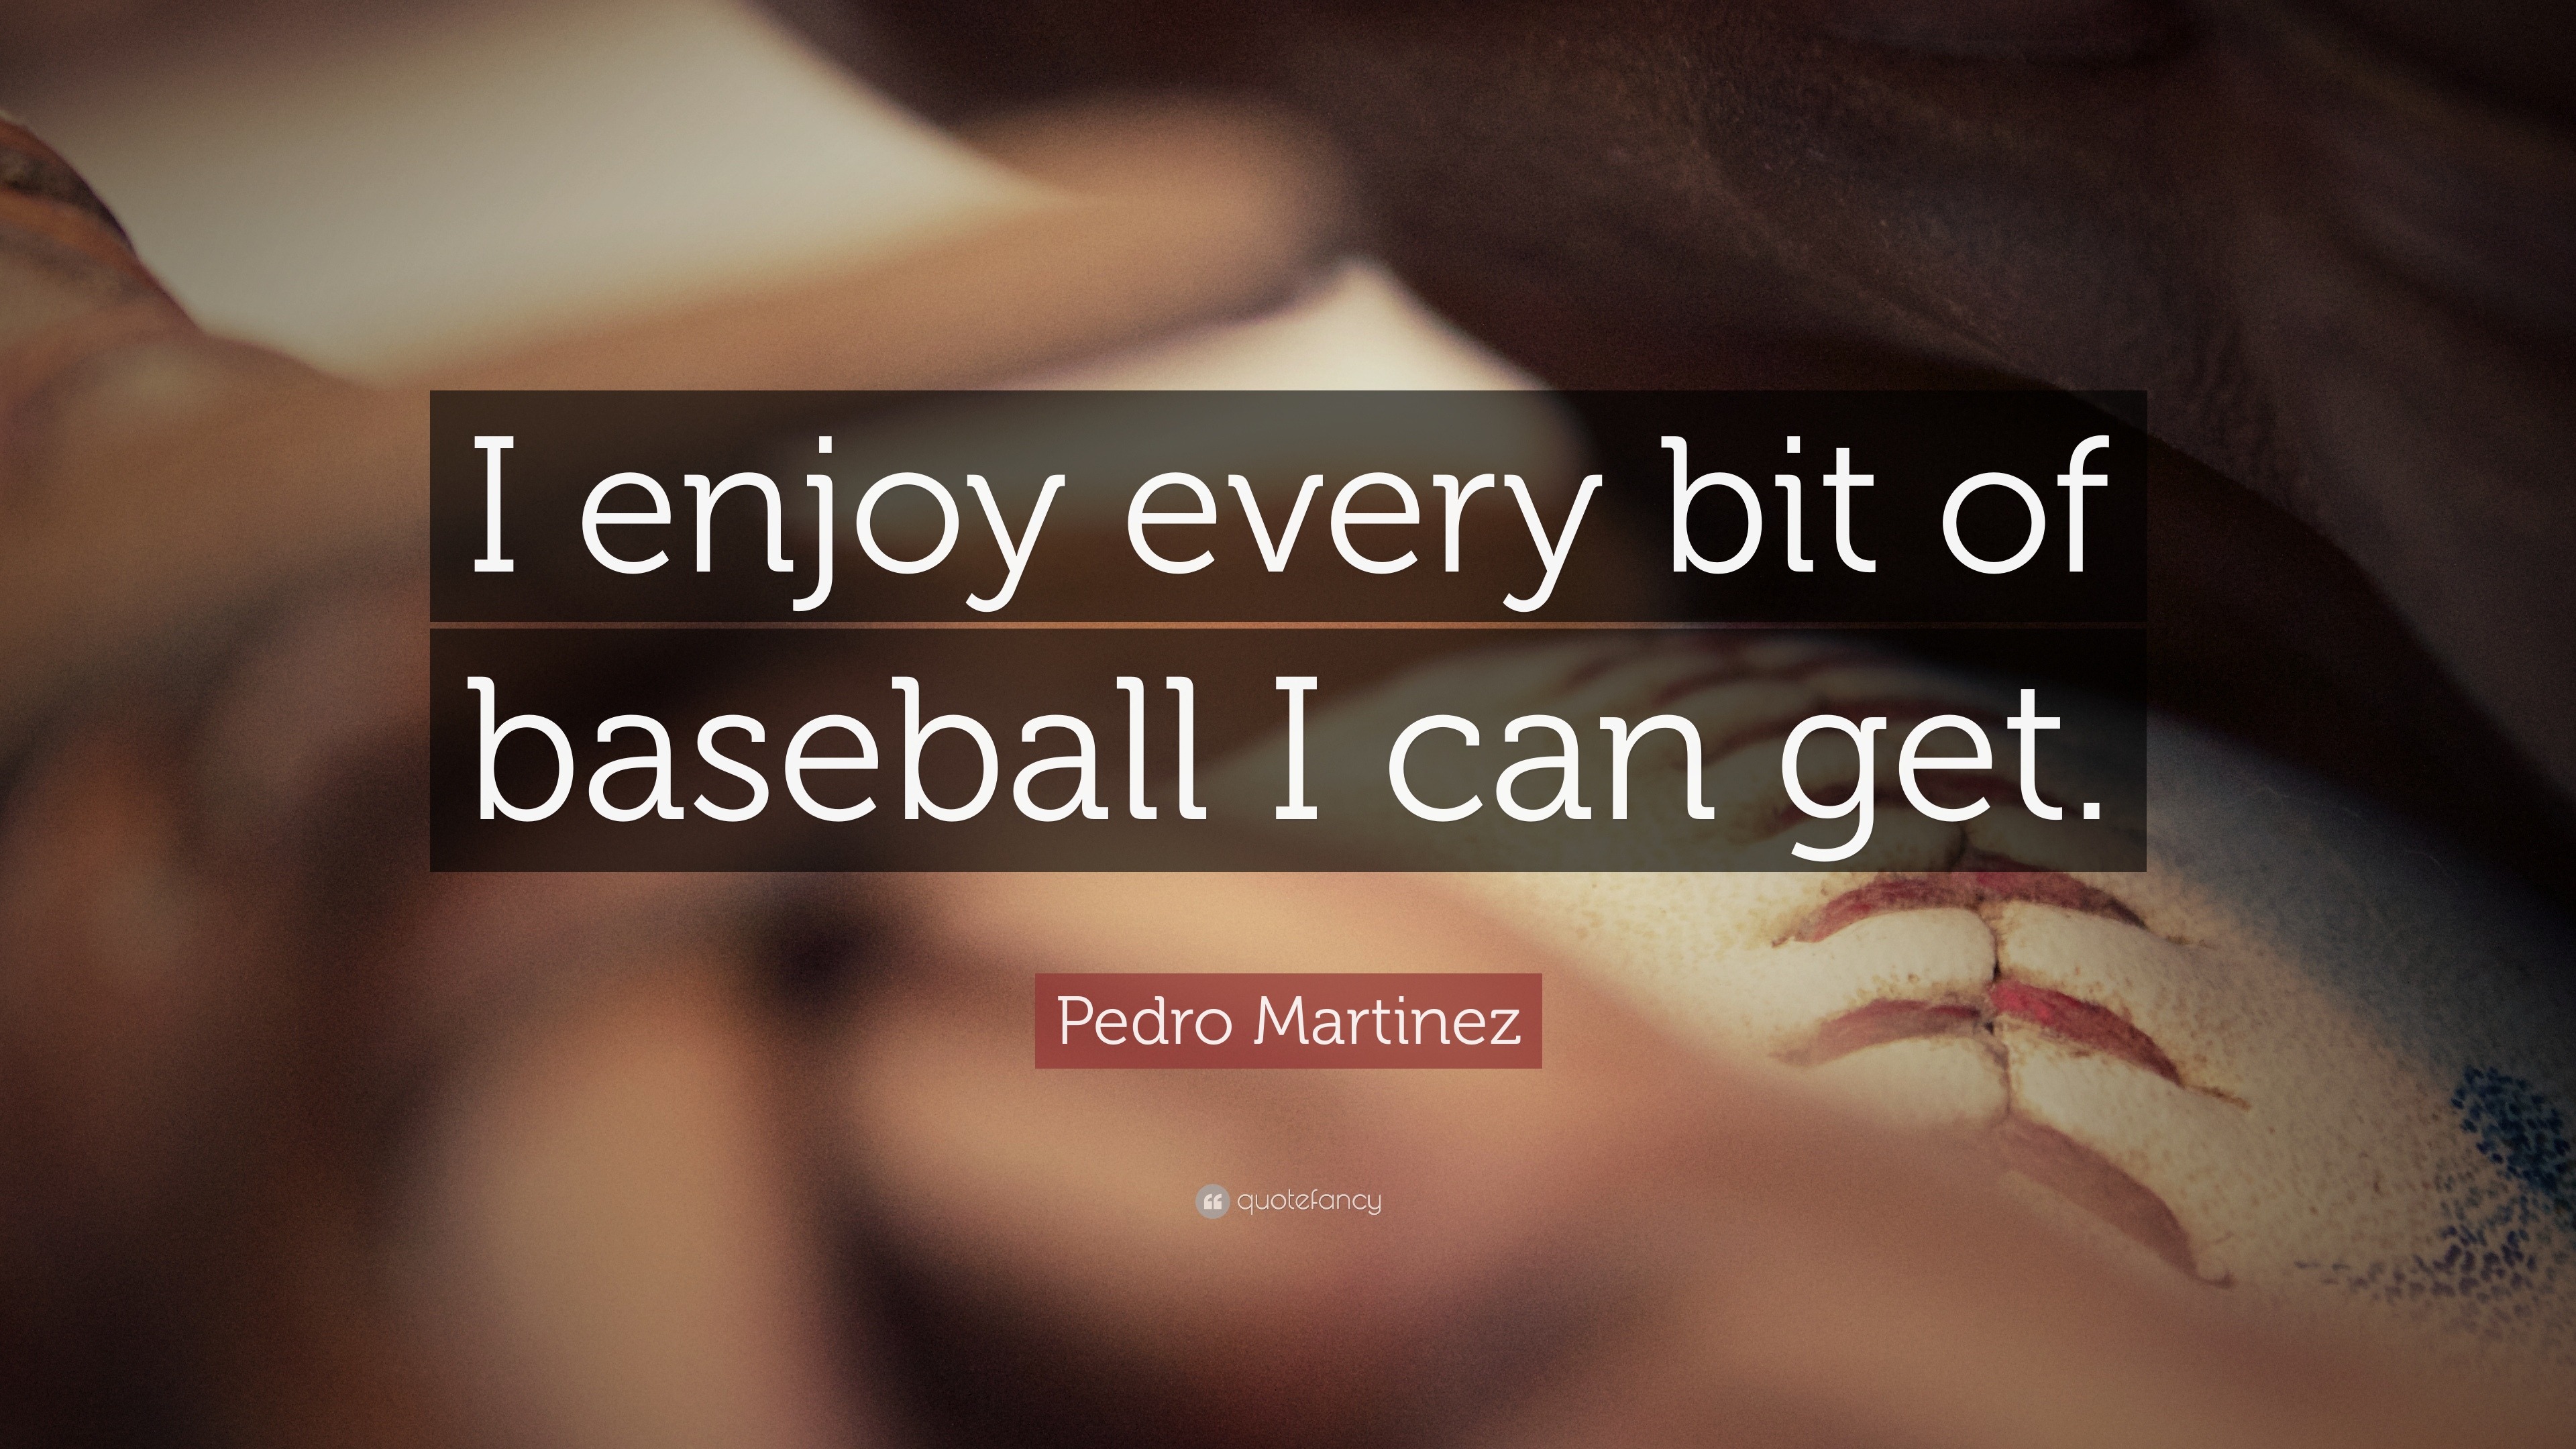 Pedro Martinez Quote: “I enjoy every bit of baseball I can get.”